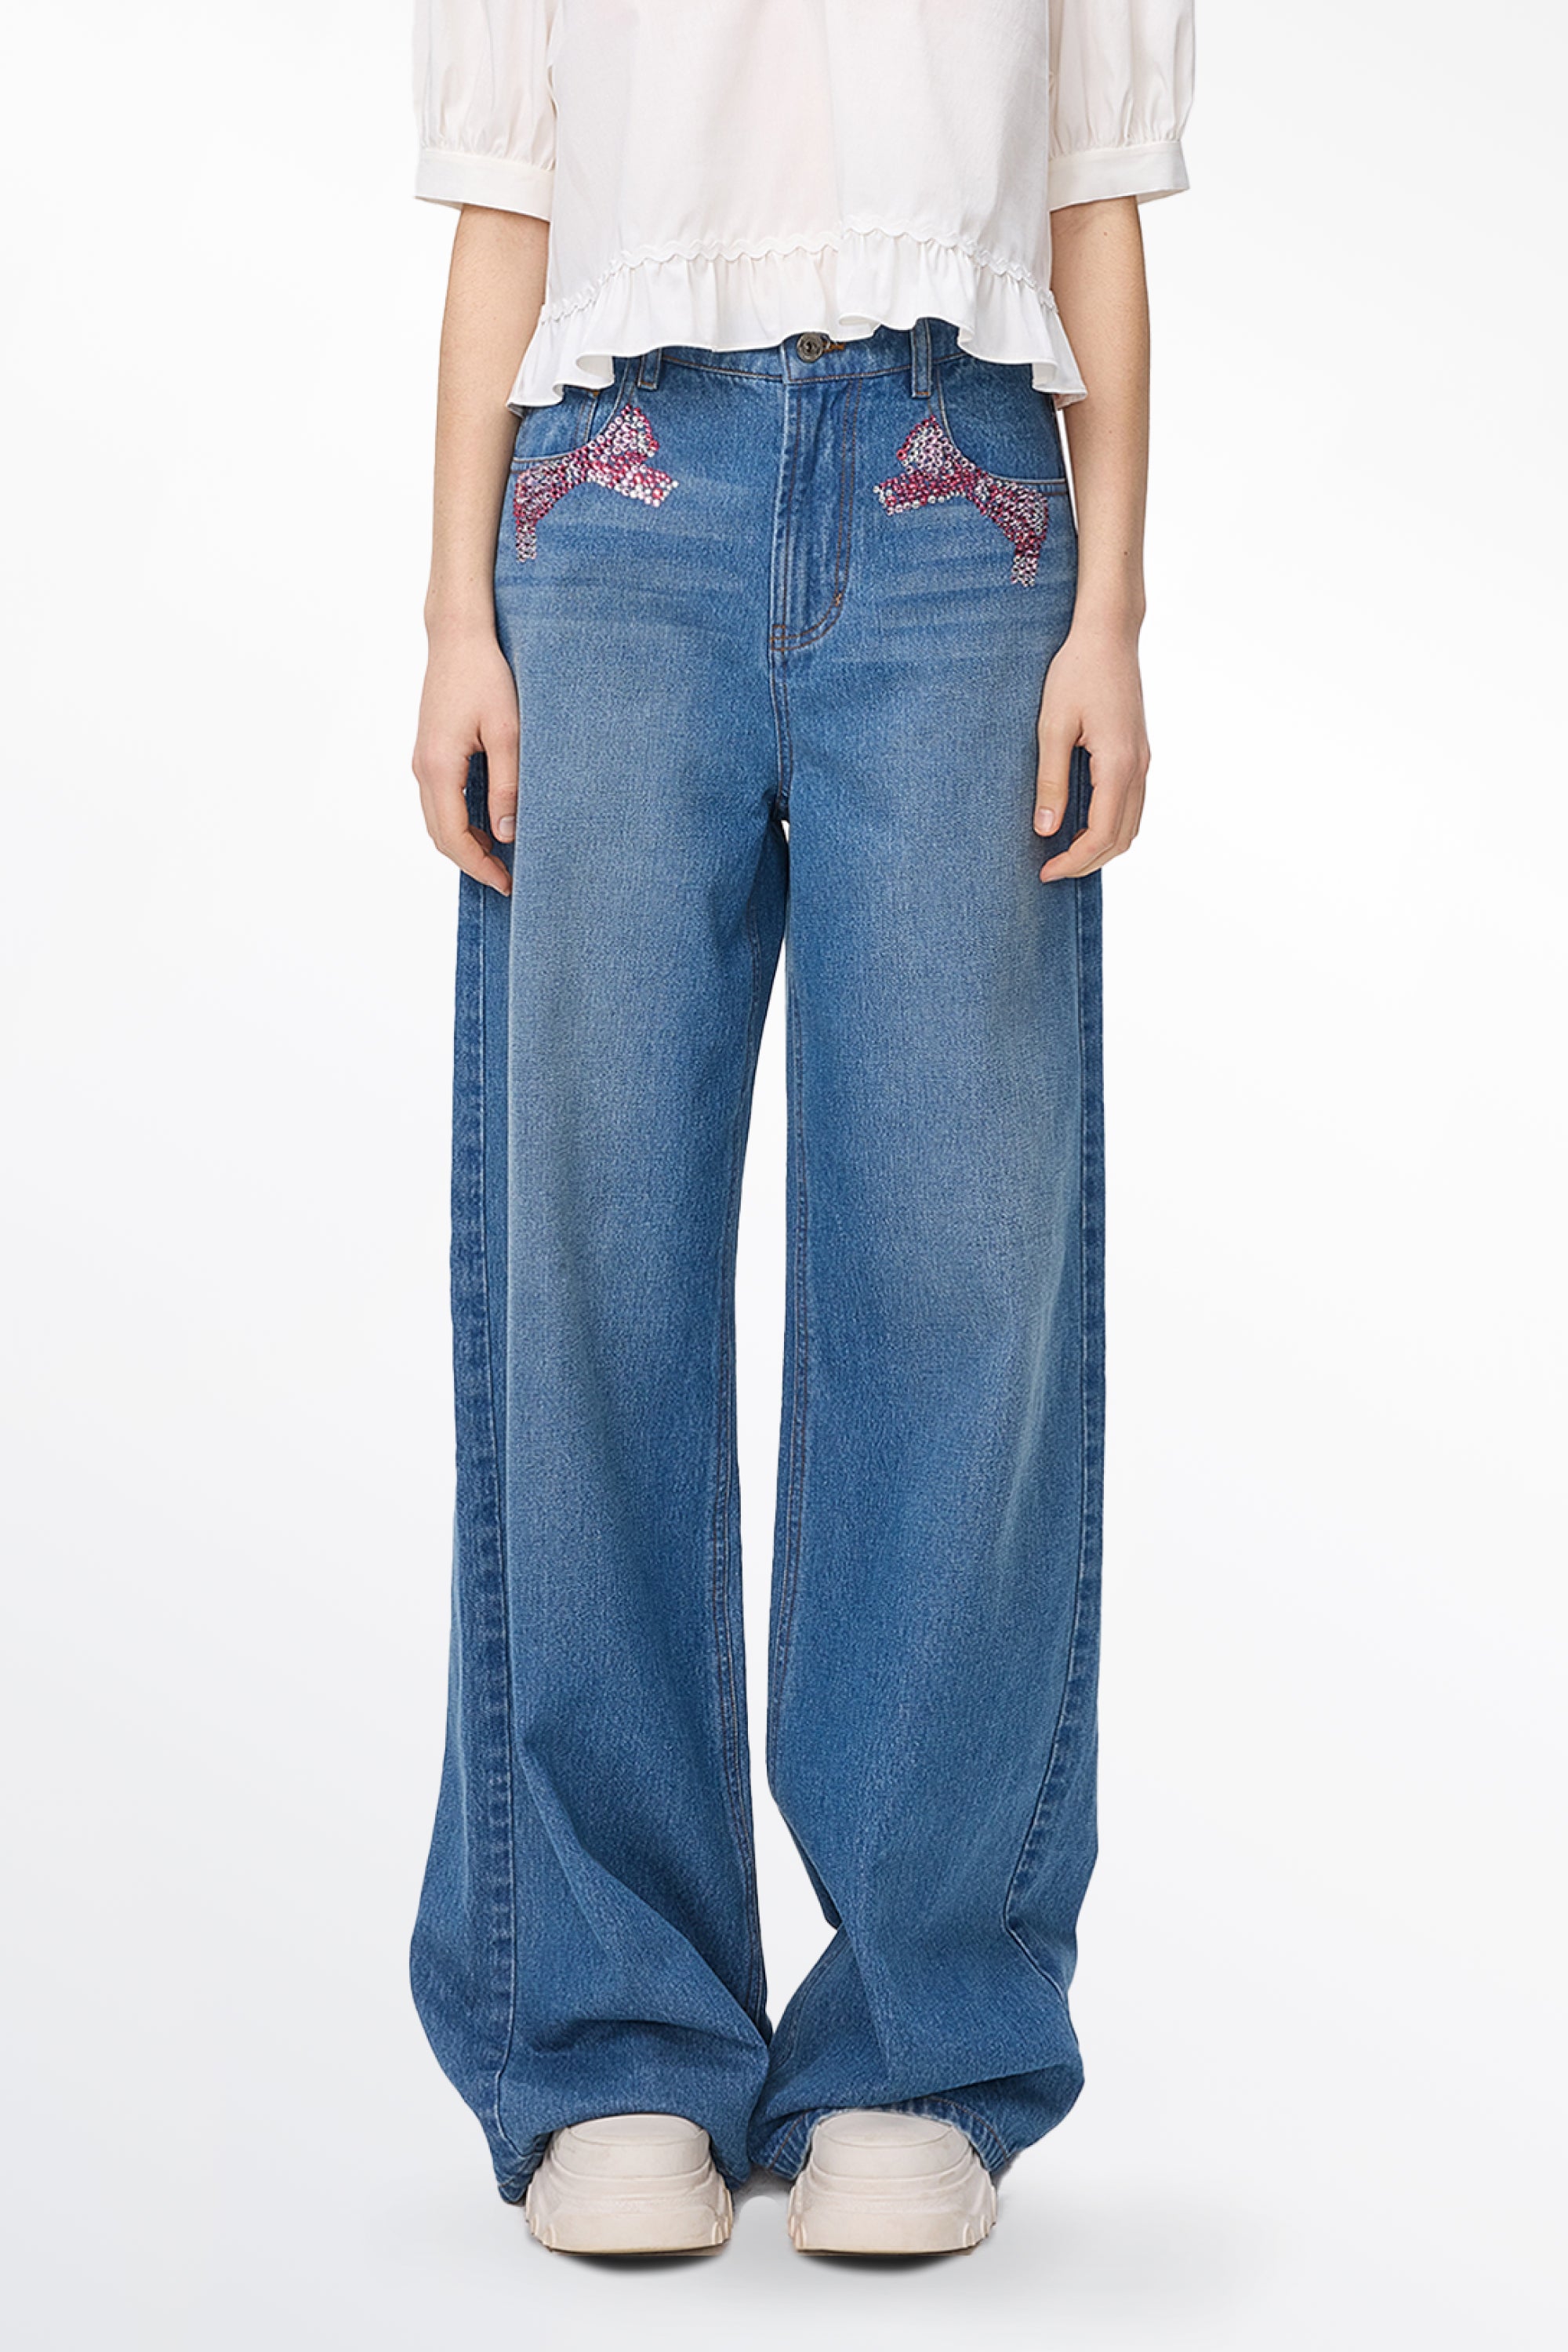 Oliphia Rhinestone Ribbon Embellishment Jeans in Cotton Denim Twill